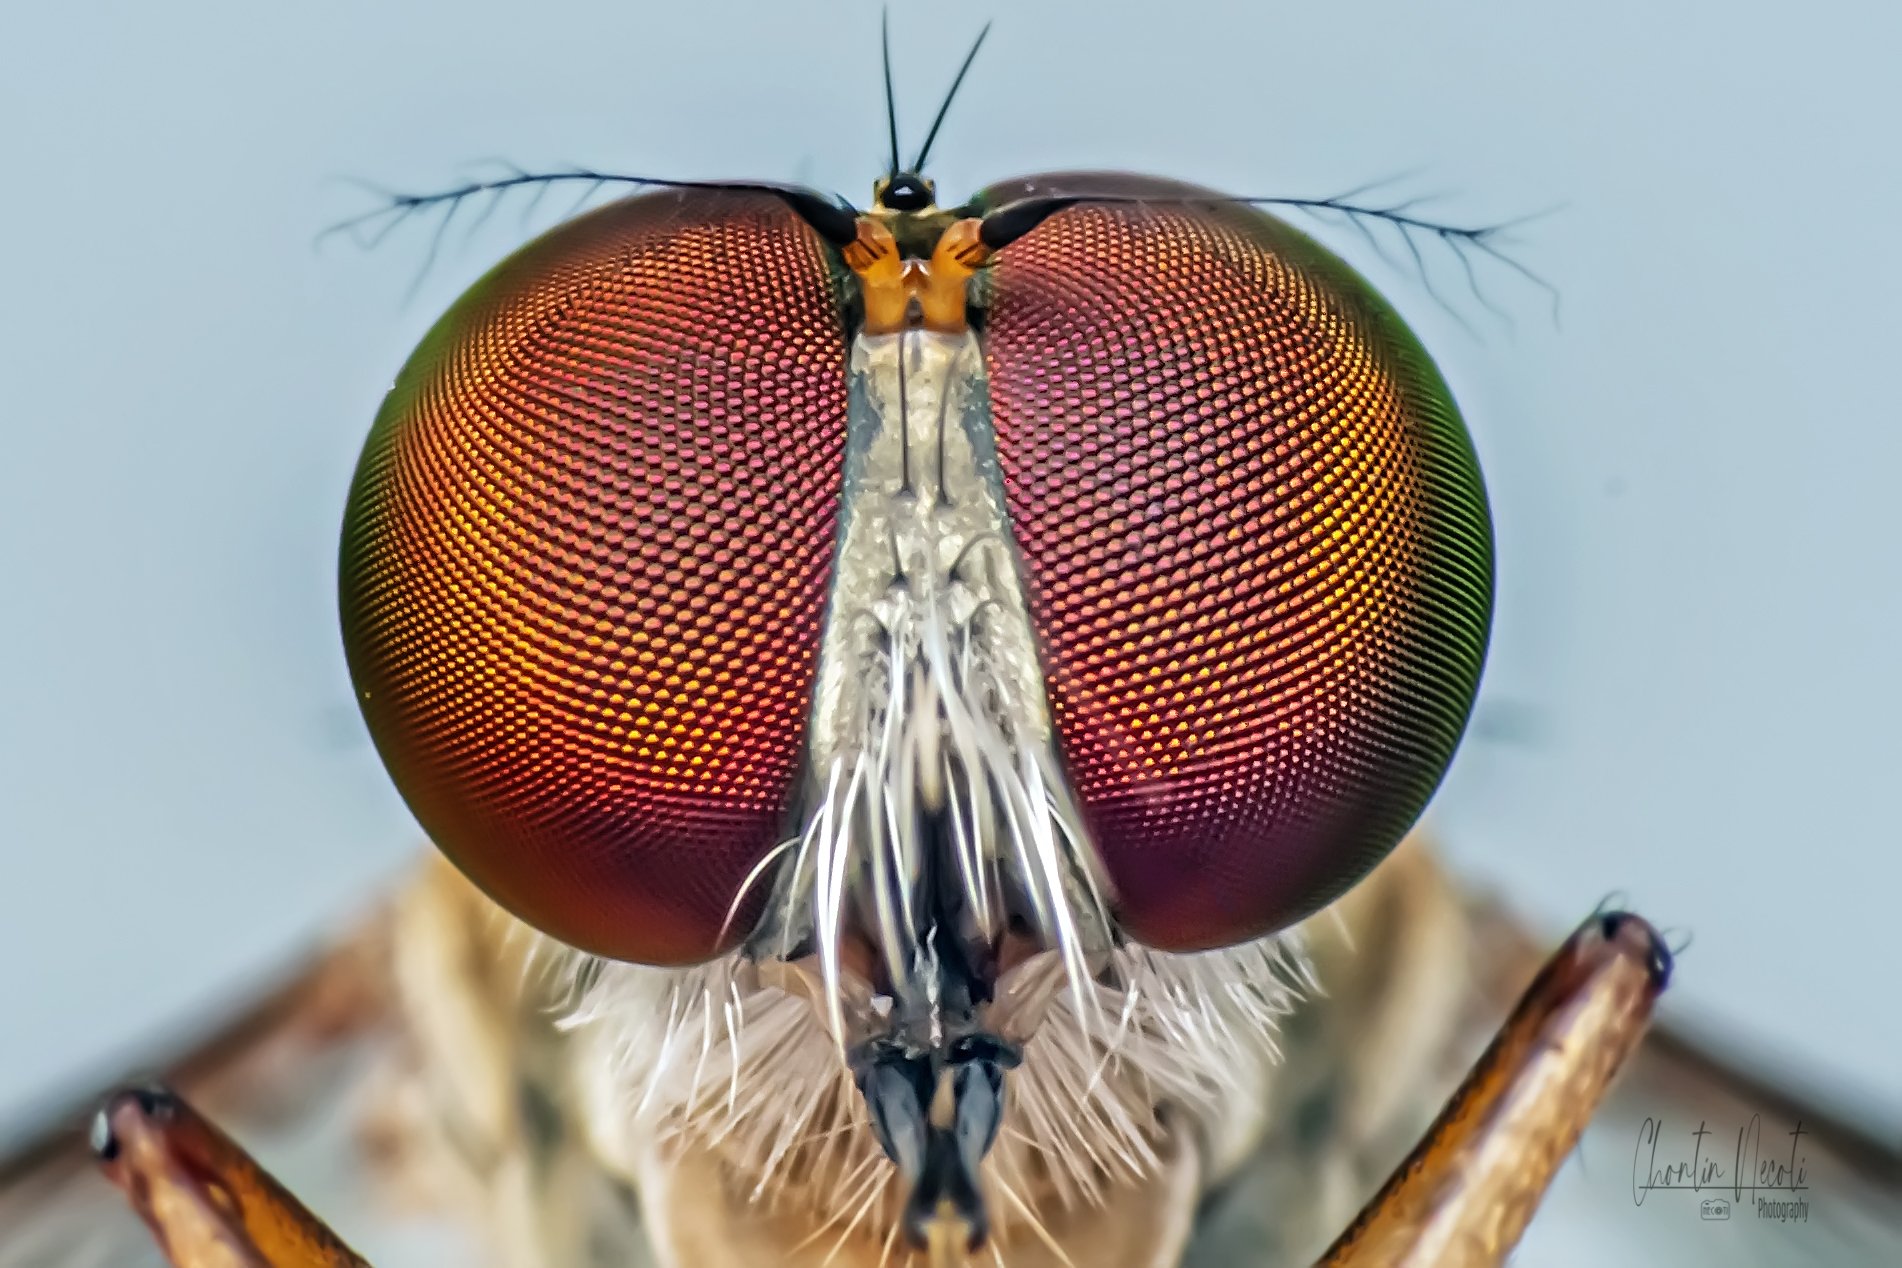 In Photos: Amazing Fly Eyes